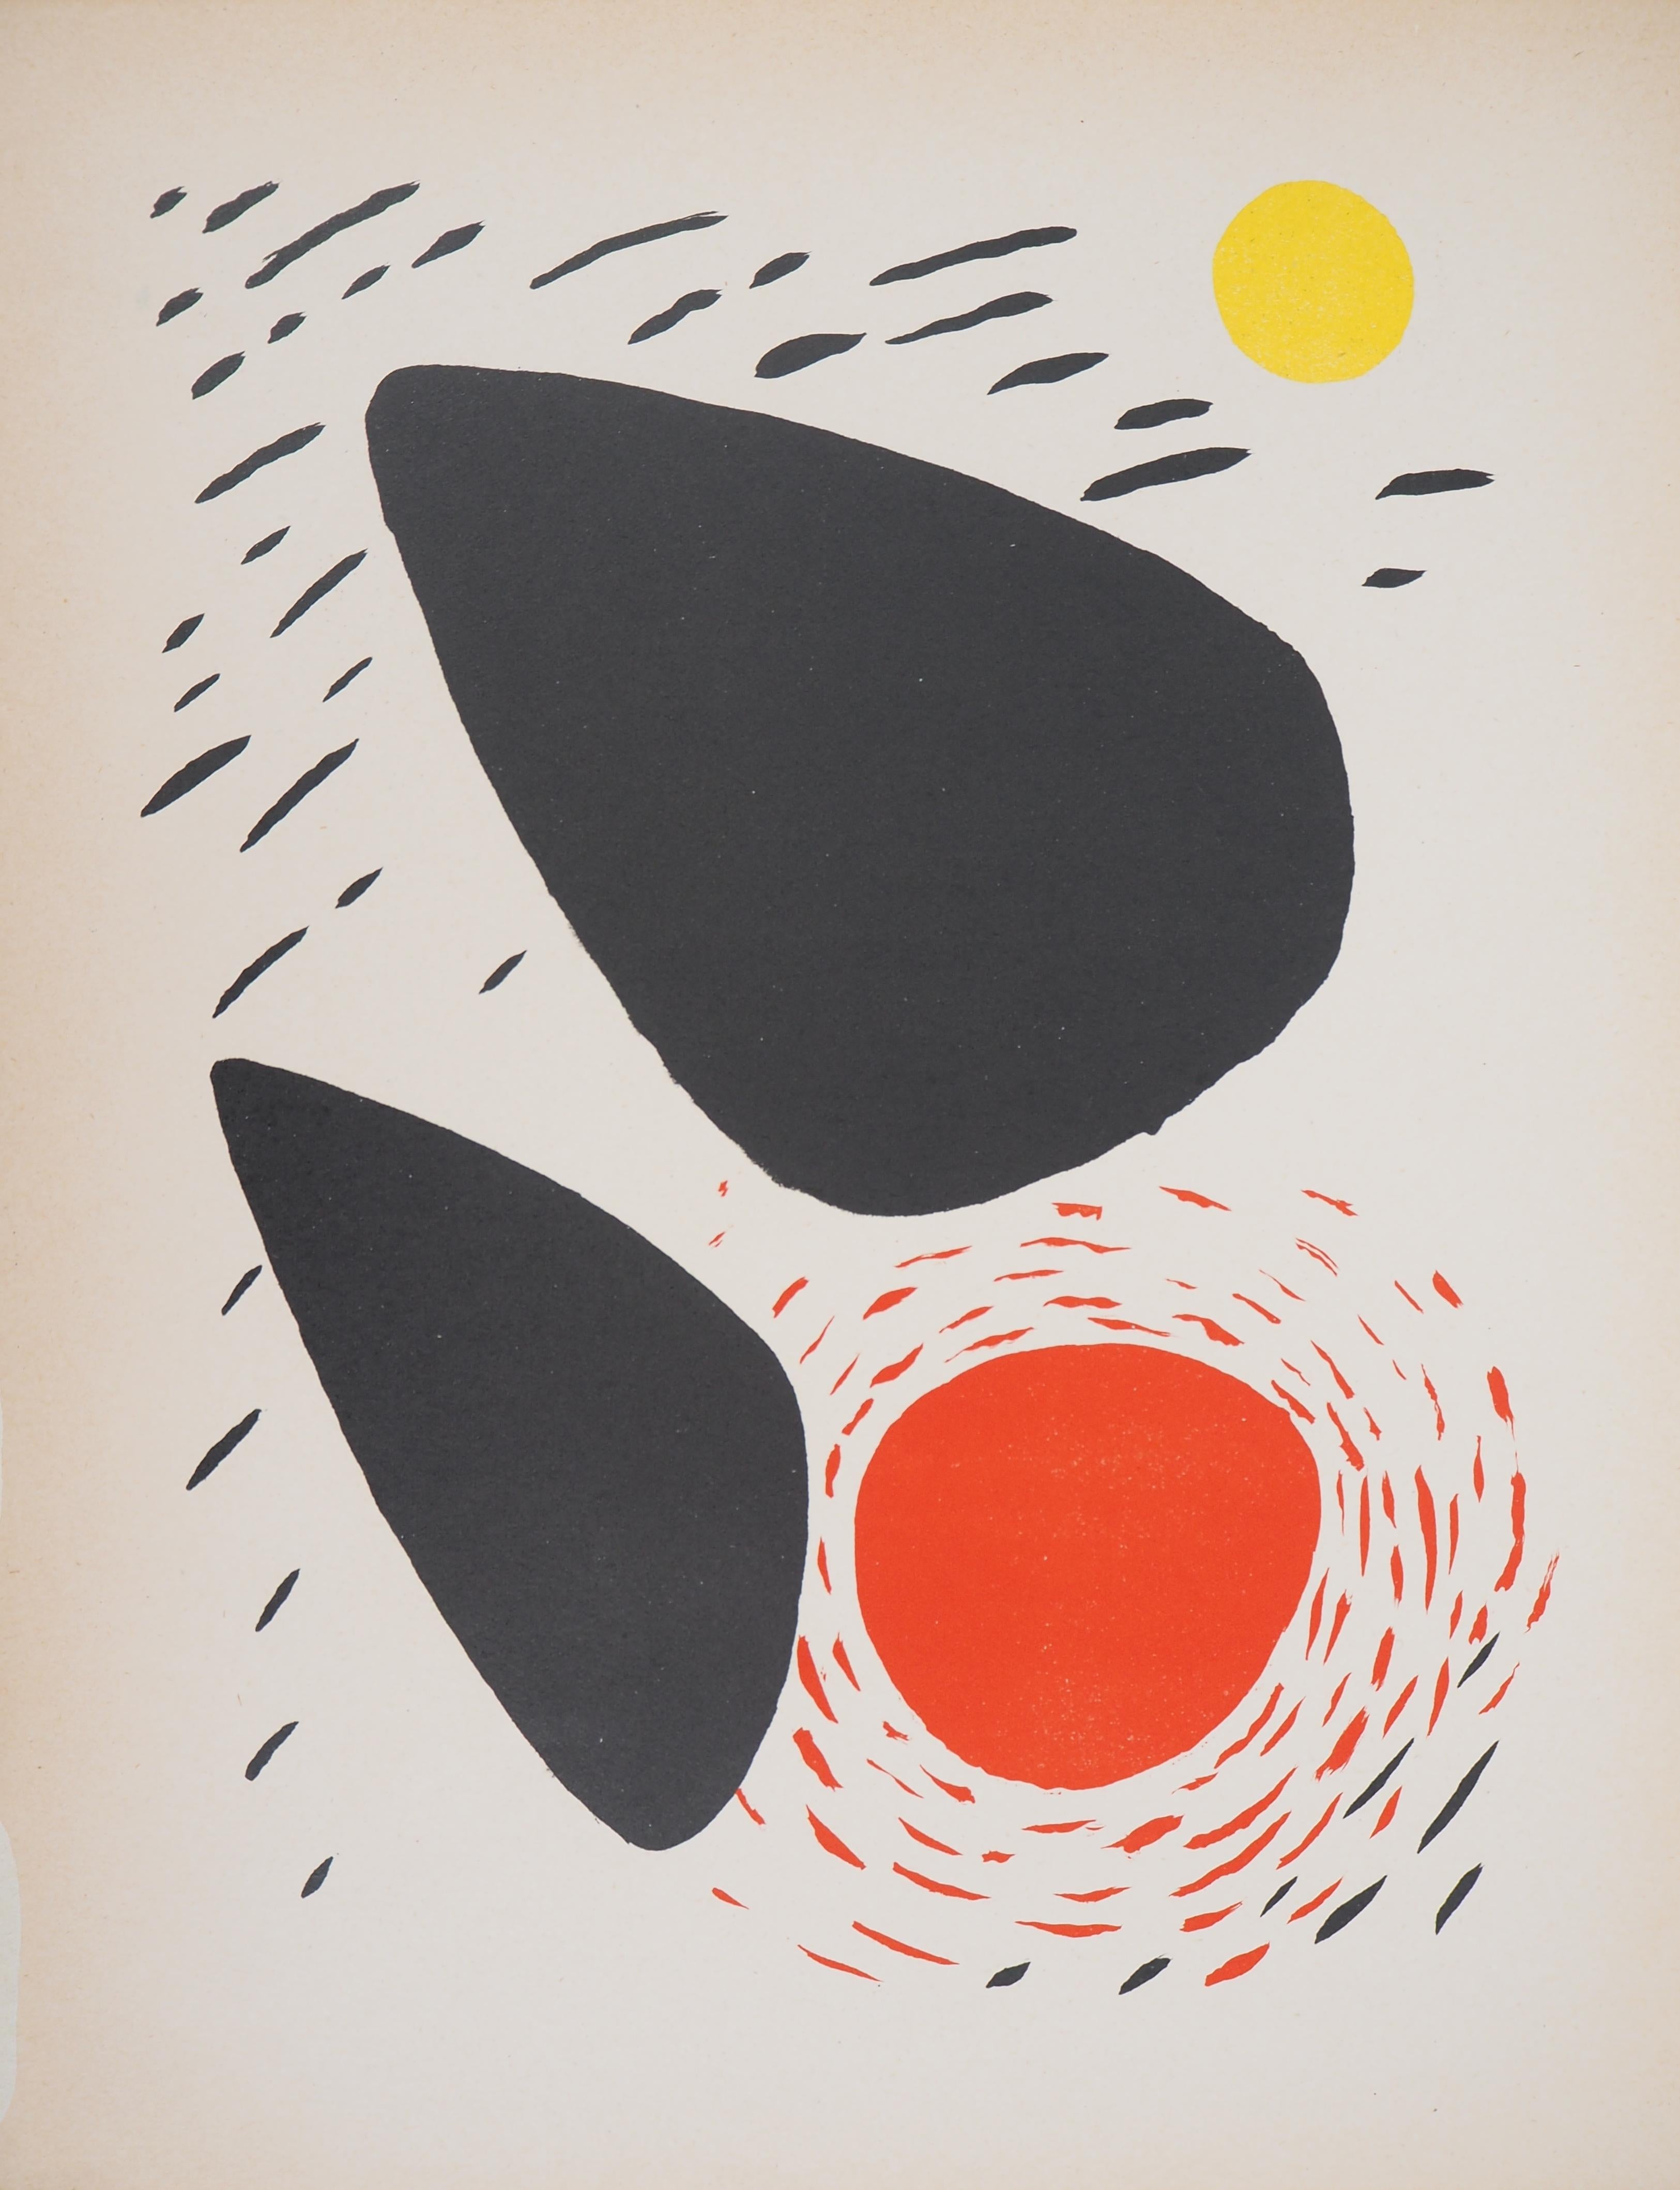 Rocks and Sun - Original lithograph - Mourlot, 1952